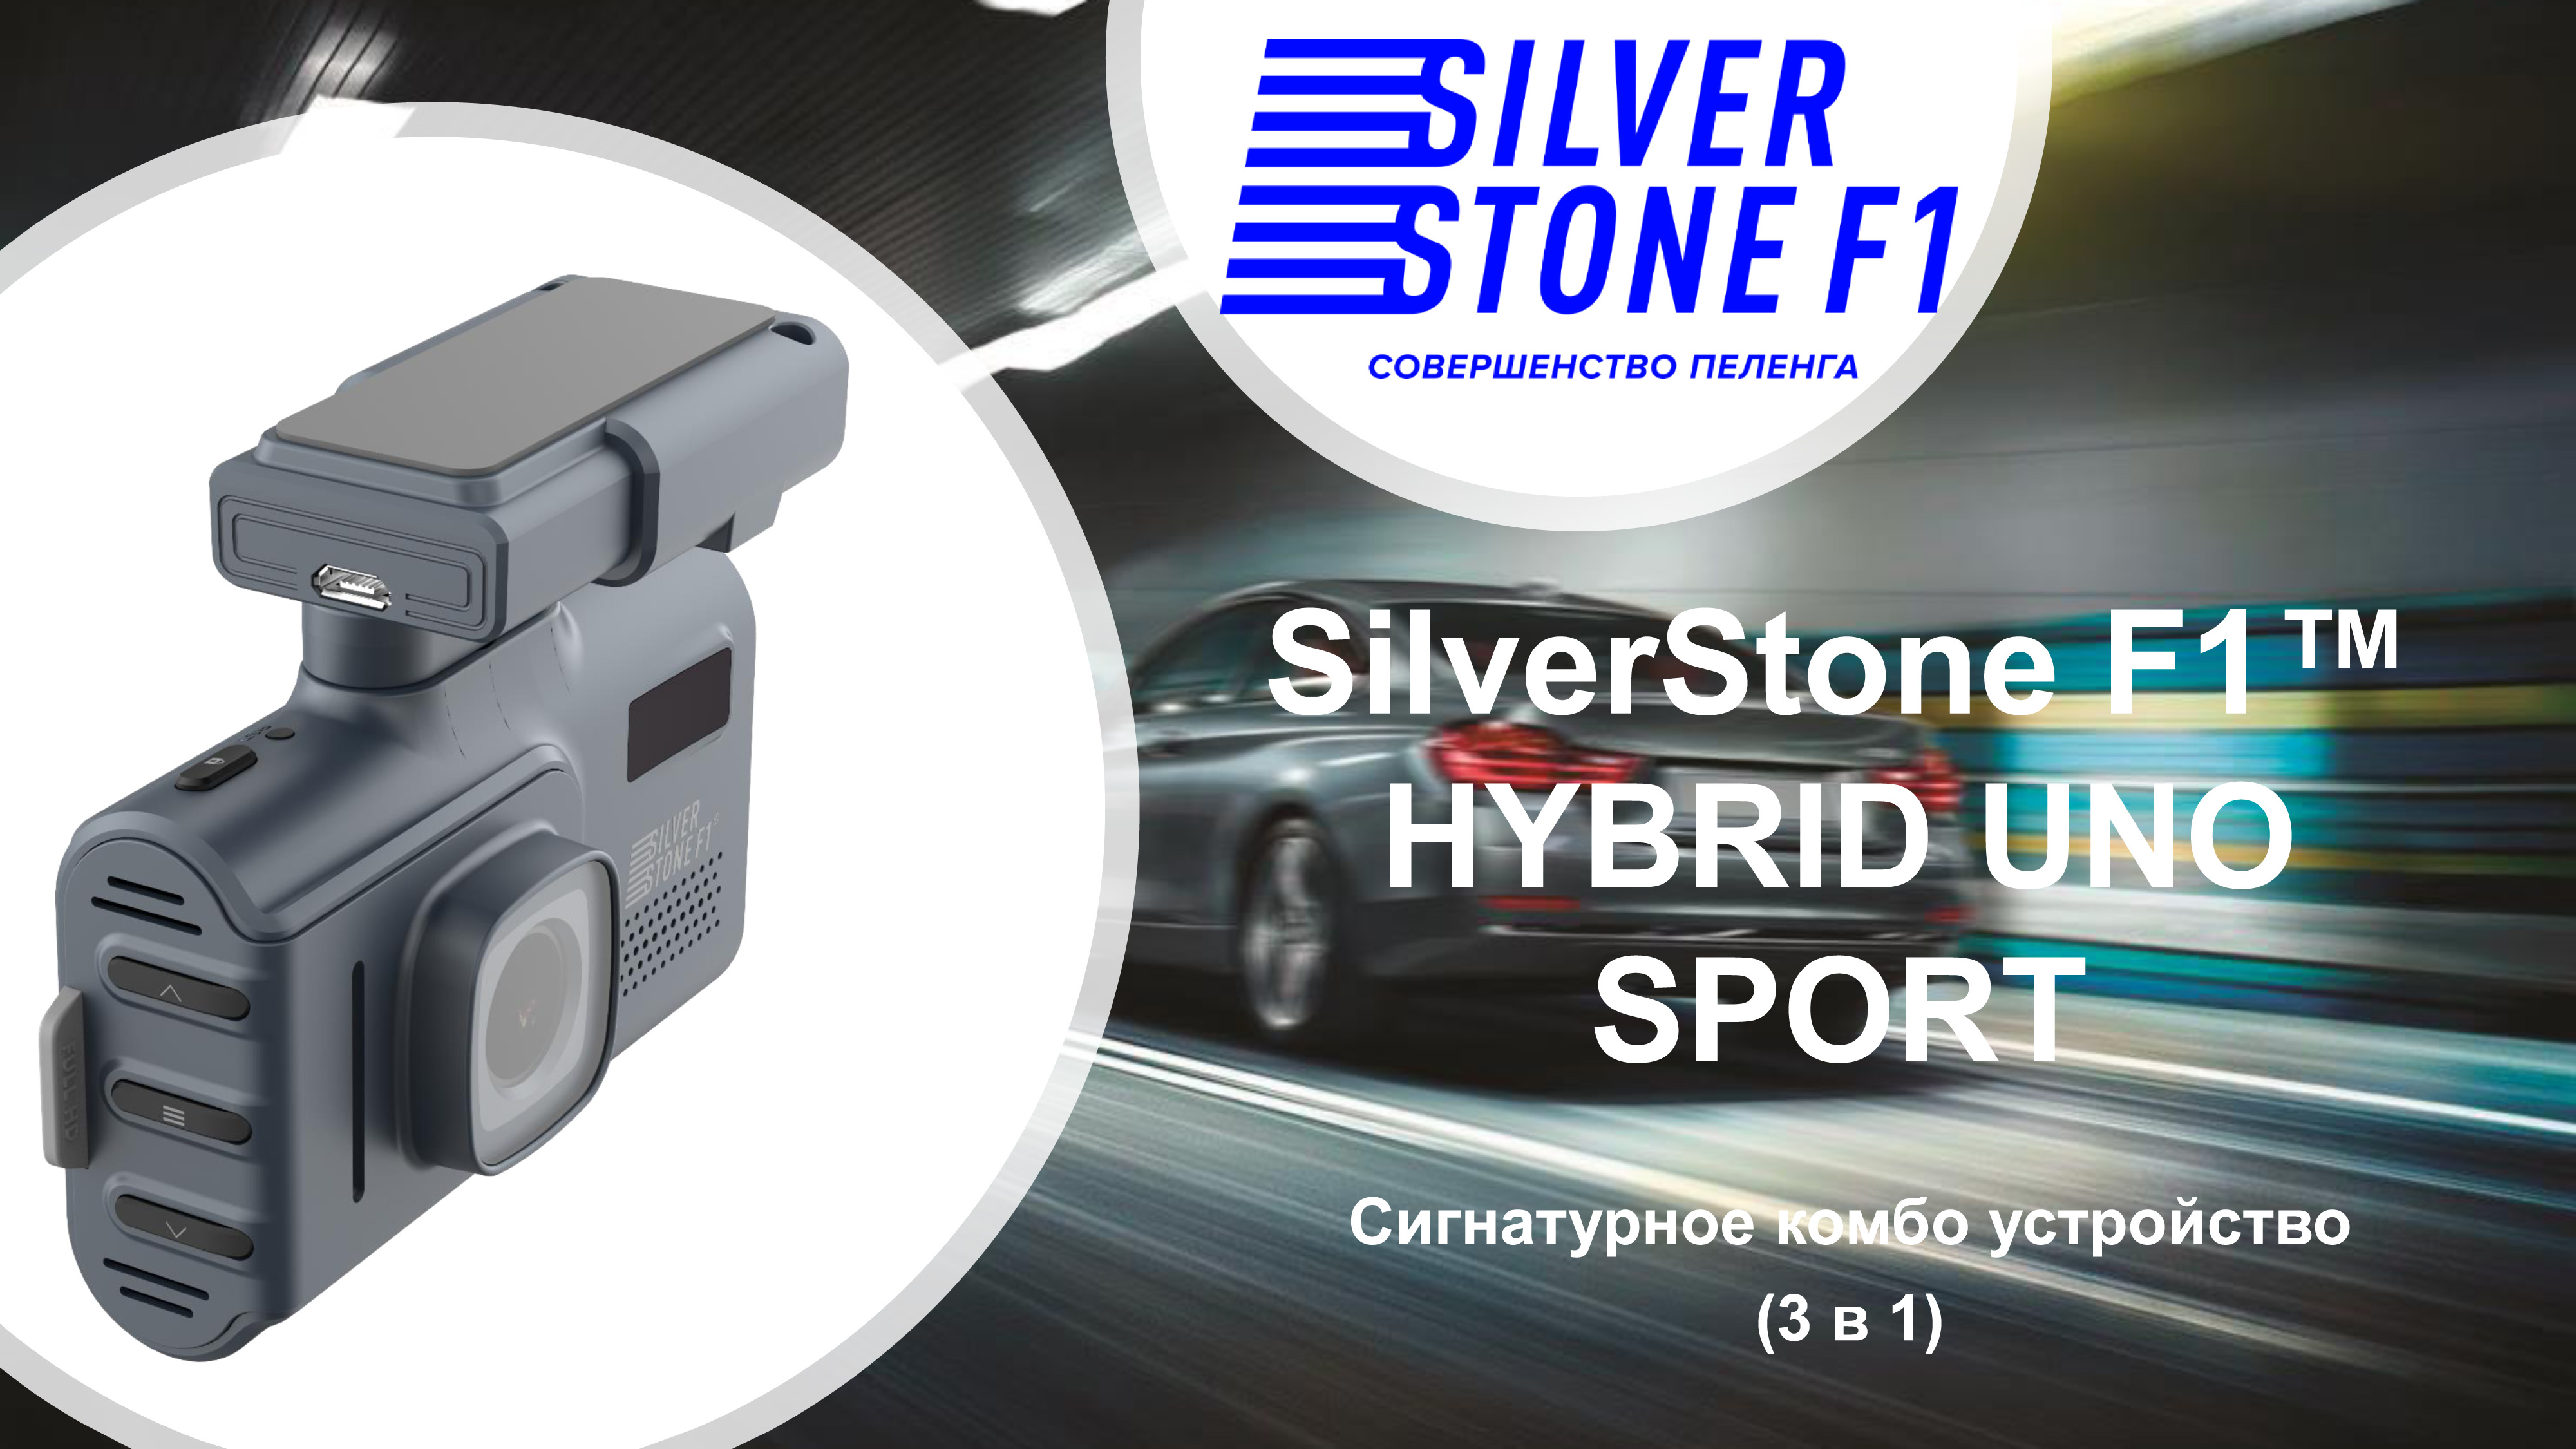 Видеорегистратор silverstone f1 hybrid uno sport инструкция